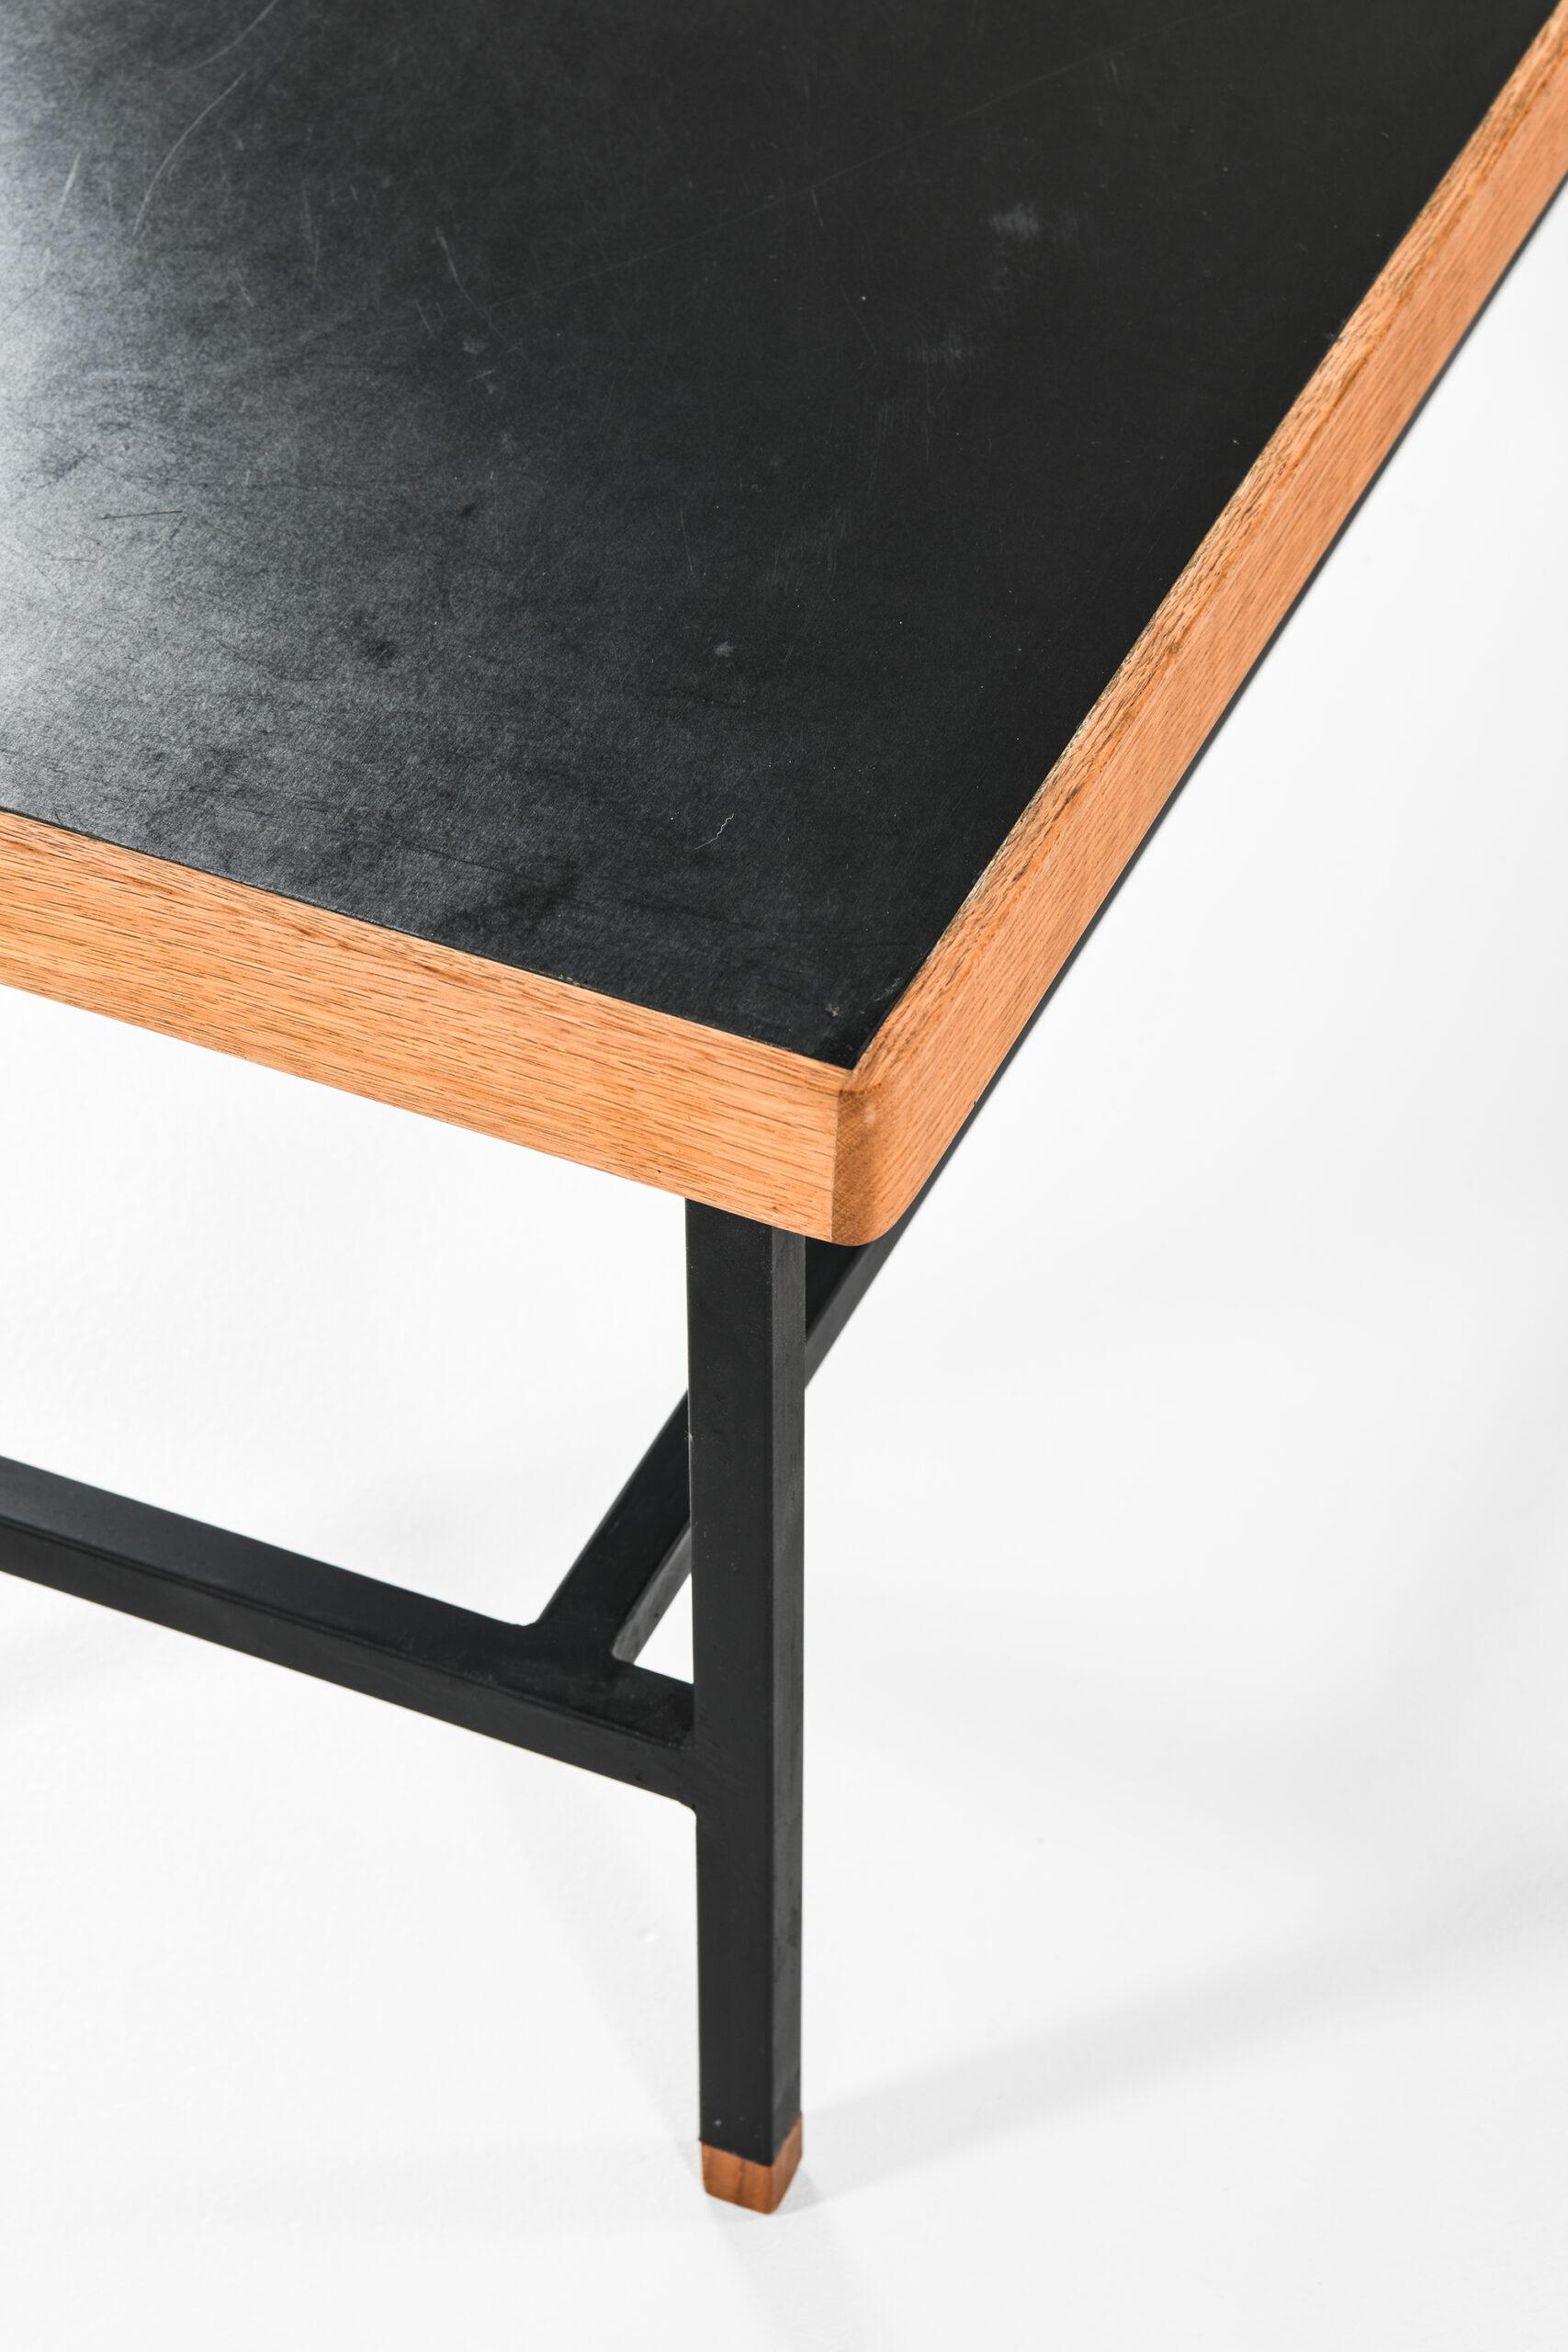 Kurt Østervig Bench / Side Table Produced by Jason Møbler in Denmark In Good Condition For Sale In Limhamn, Skåne län